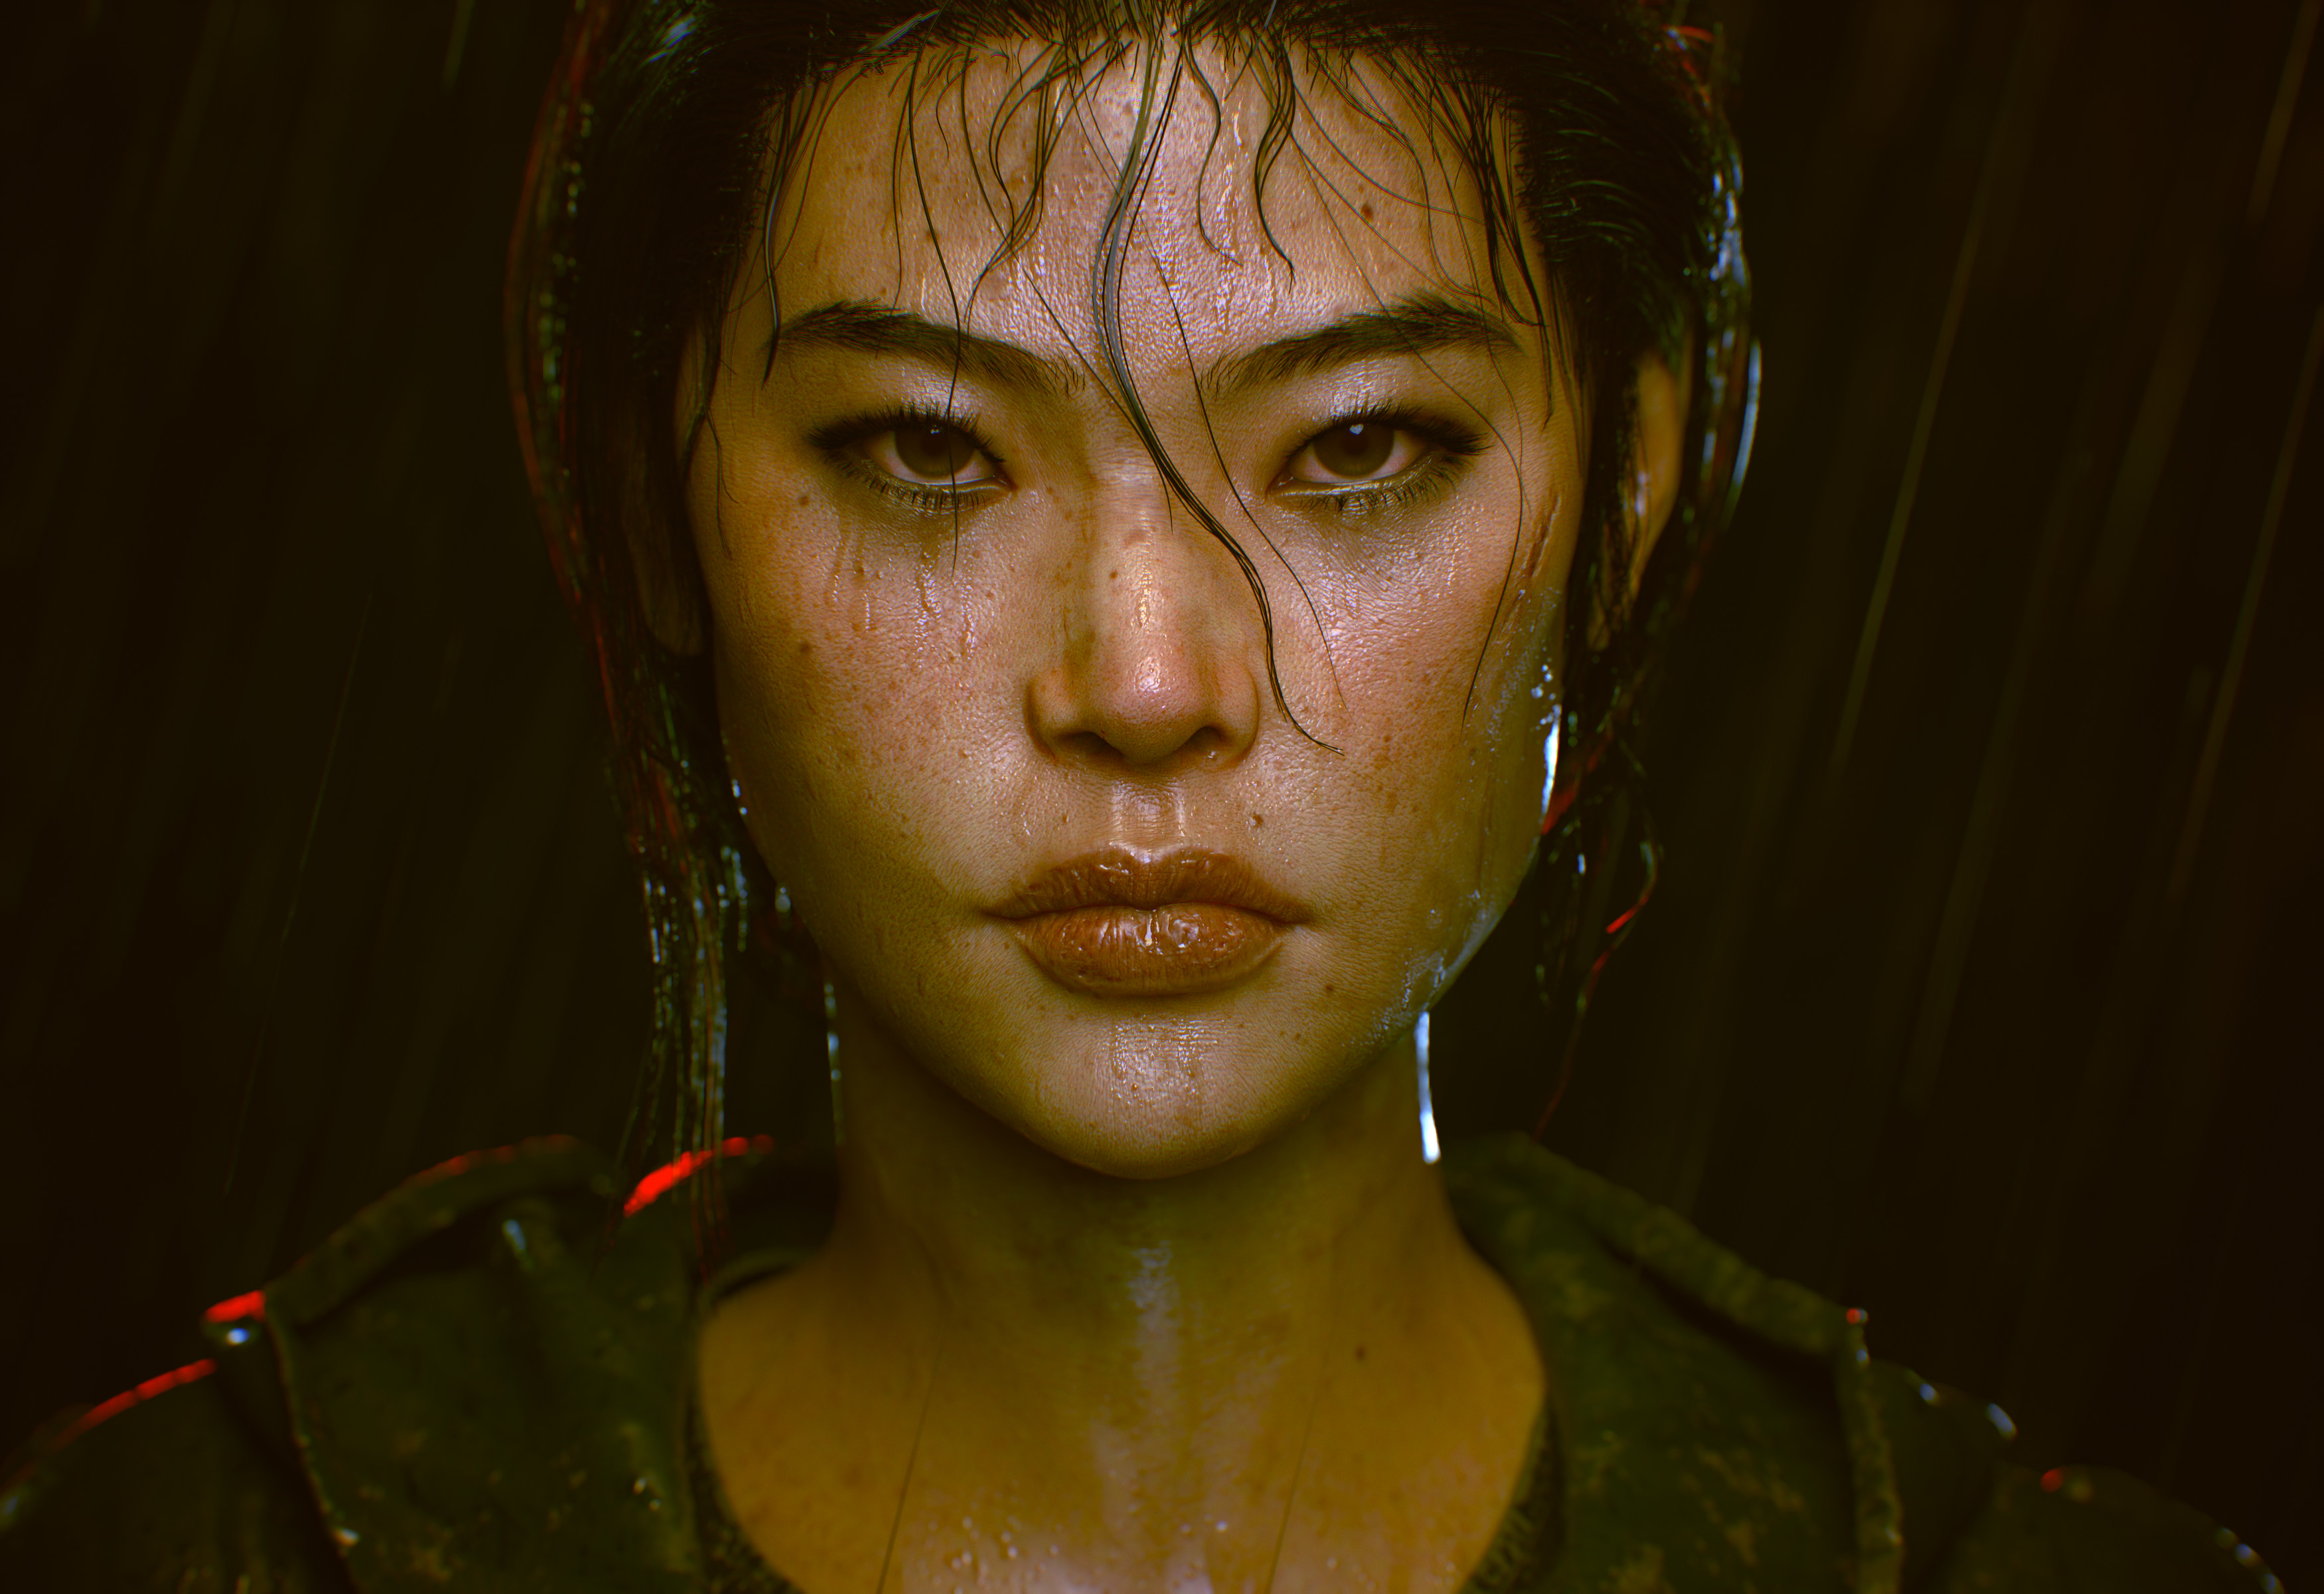 Women Digital Art Face Closeup Render Asian Looking At Viewer Rain Wet Hair Dark Hair Fantasy Girl 3 3500x2400